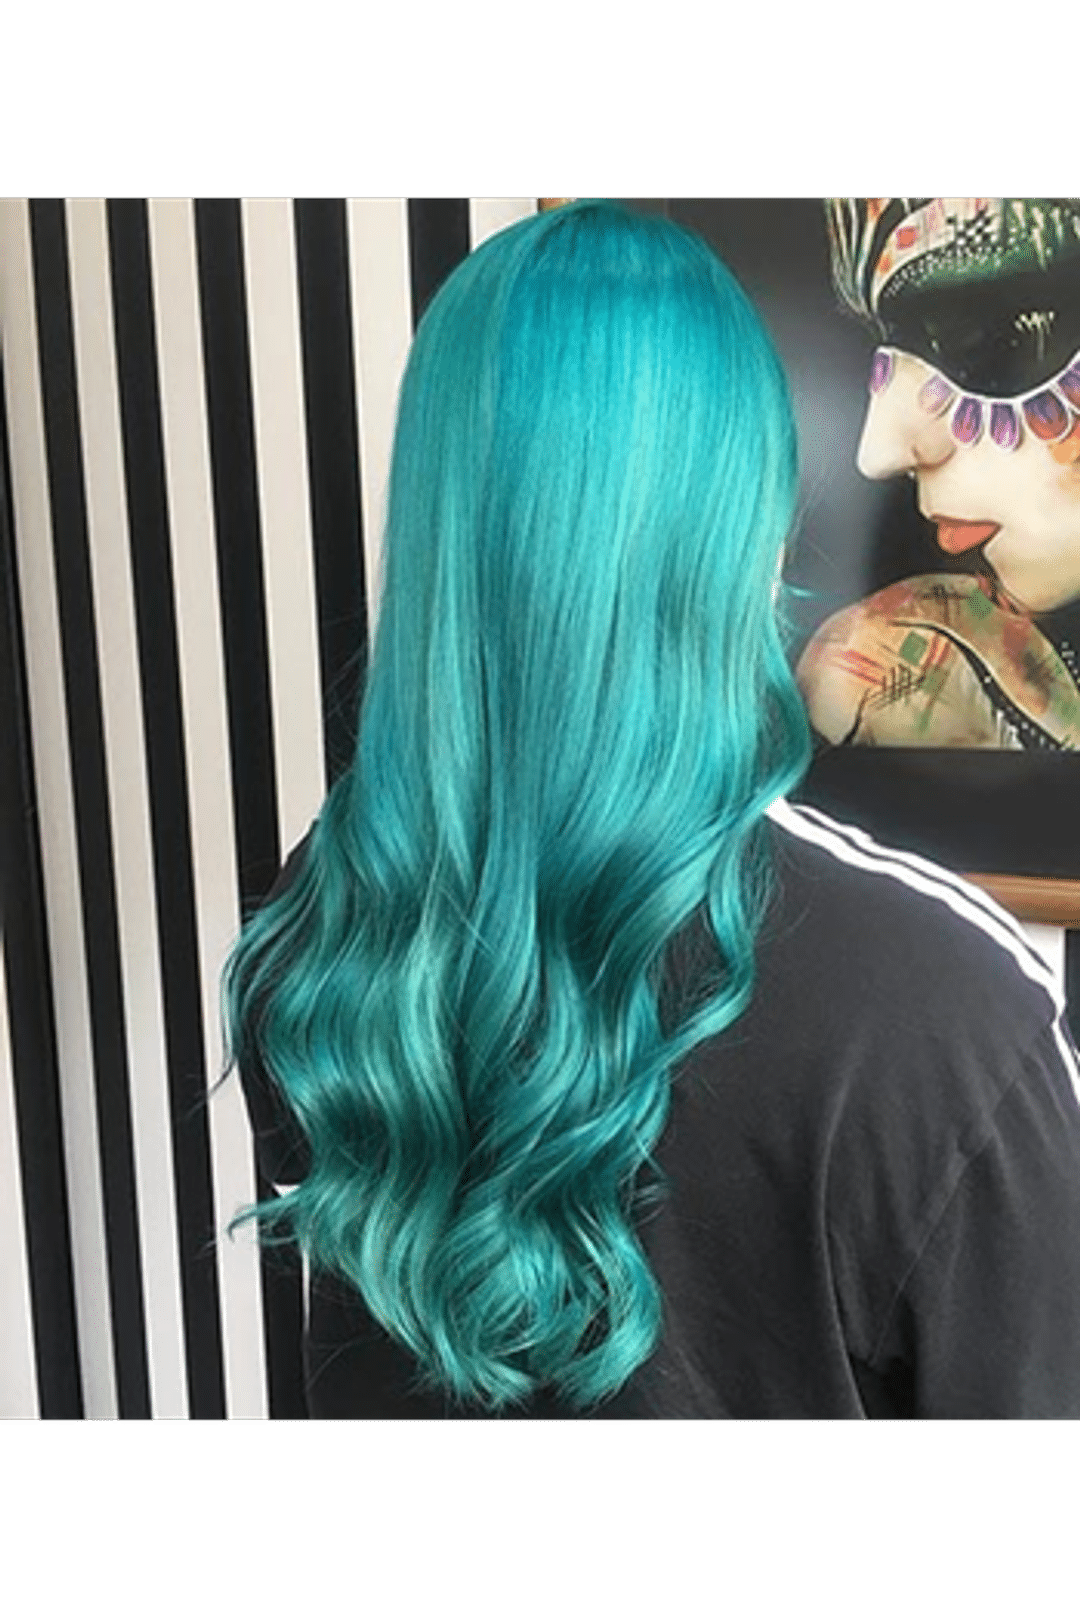 Crazy Color Semi Permanent Hair Color Cream - Blue Jade